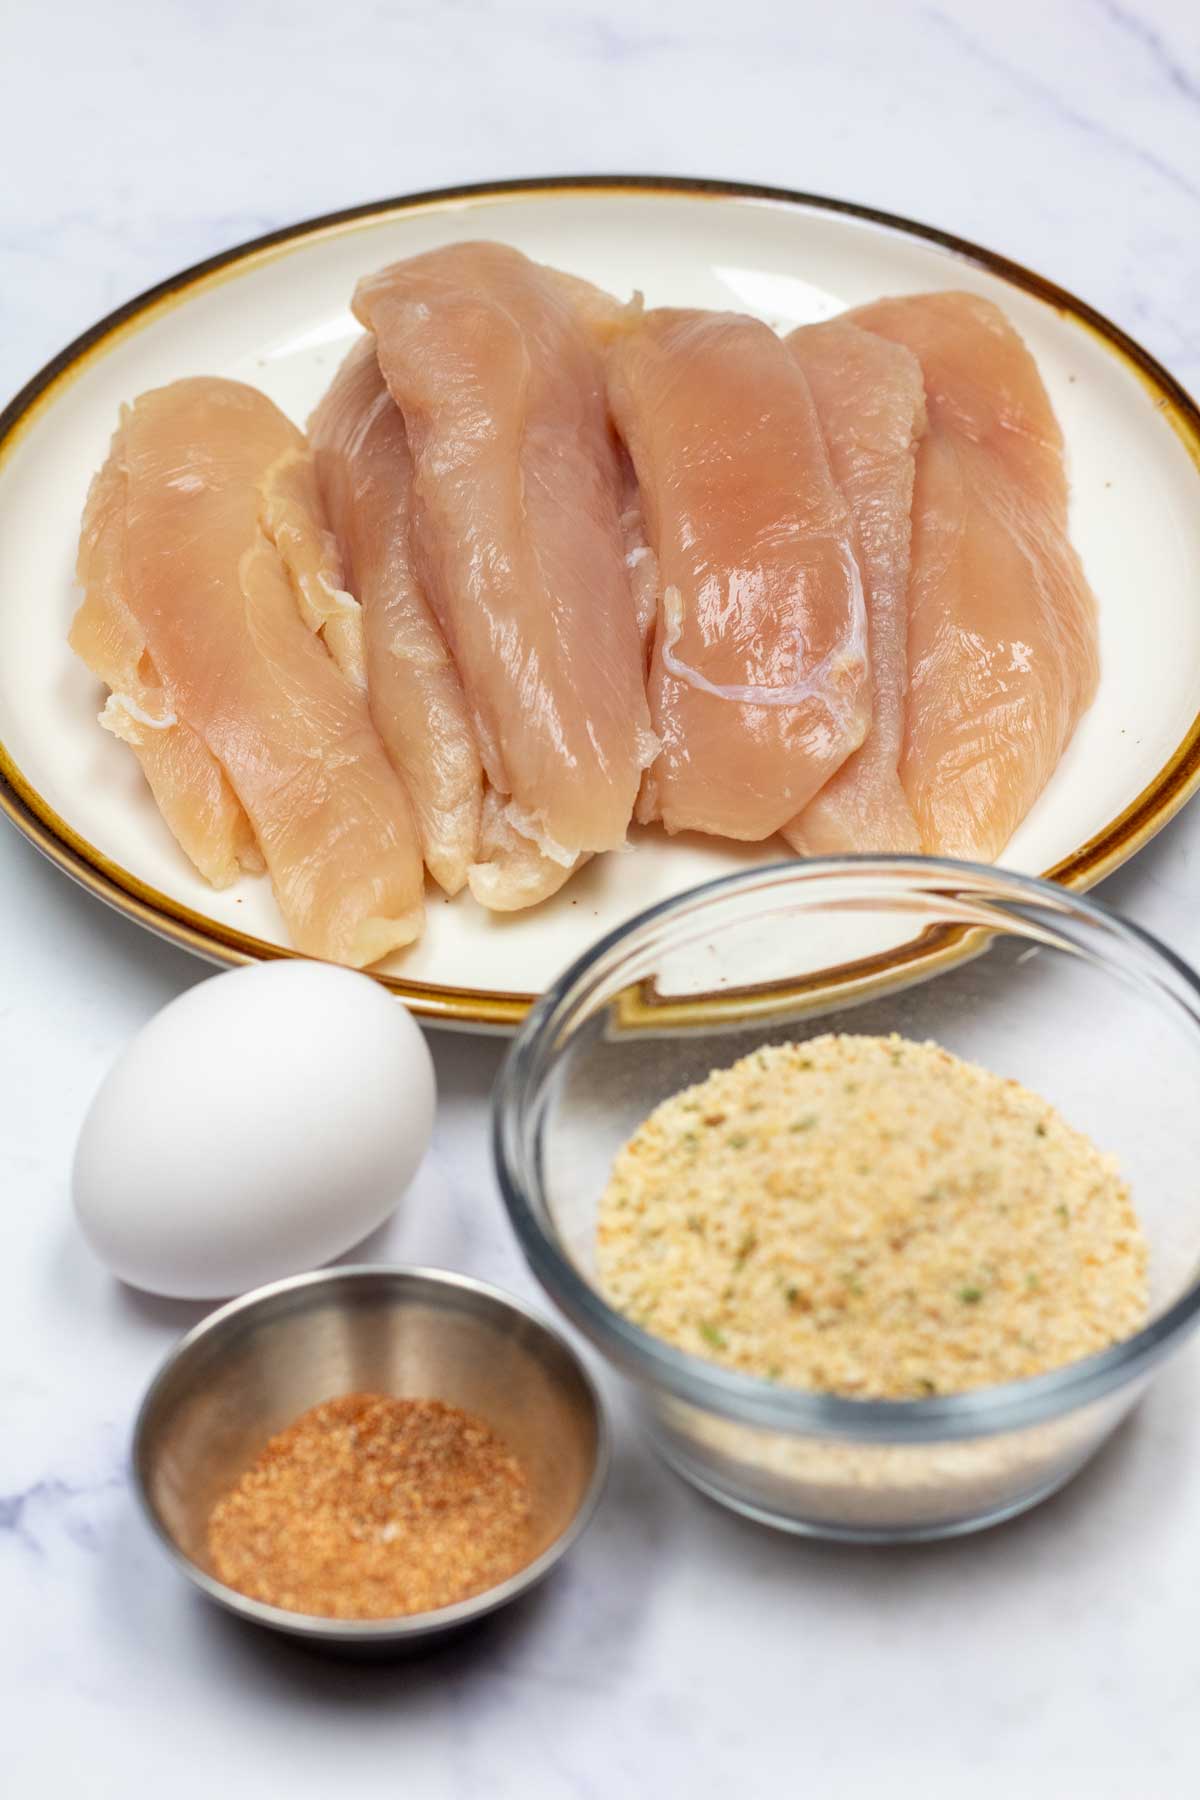 Tall image showing ingredients needed for air fryer chicken tenderloins.